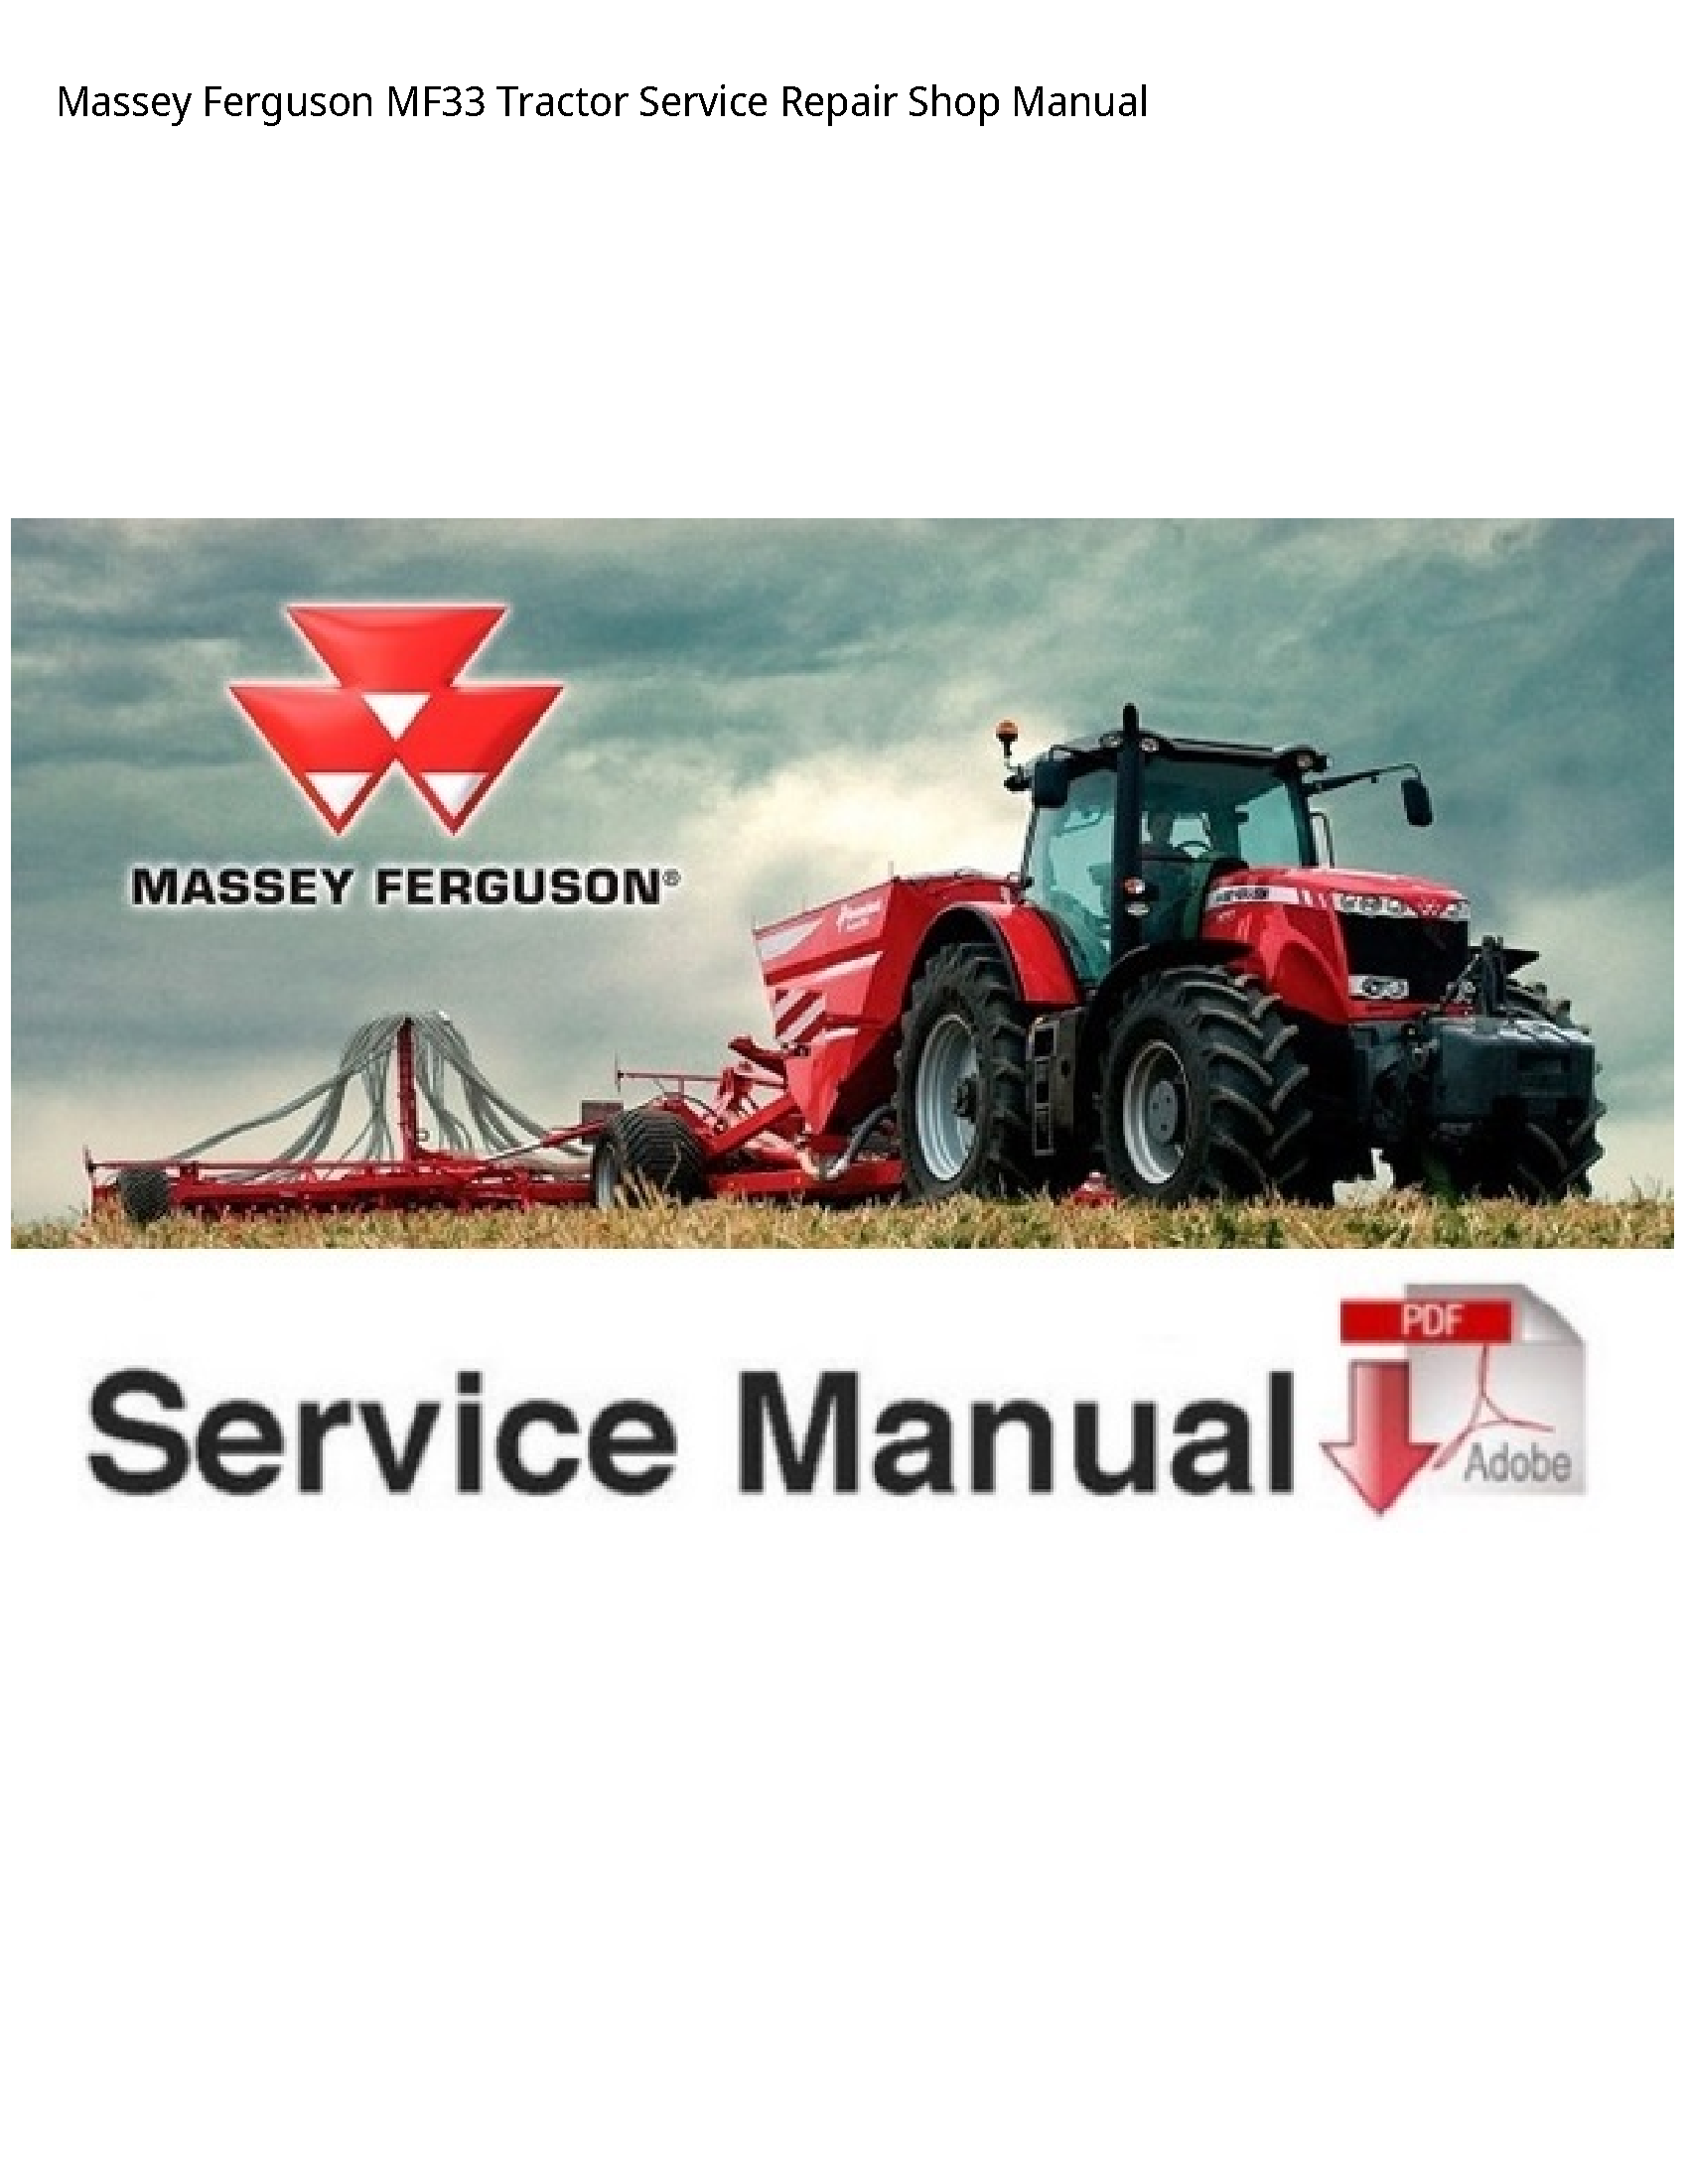 Massey Ferguson MF33 Tractor manual